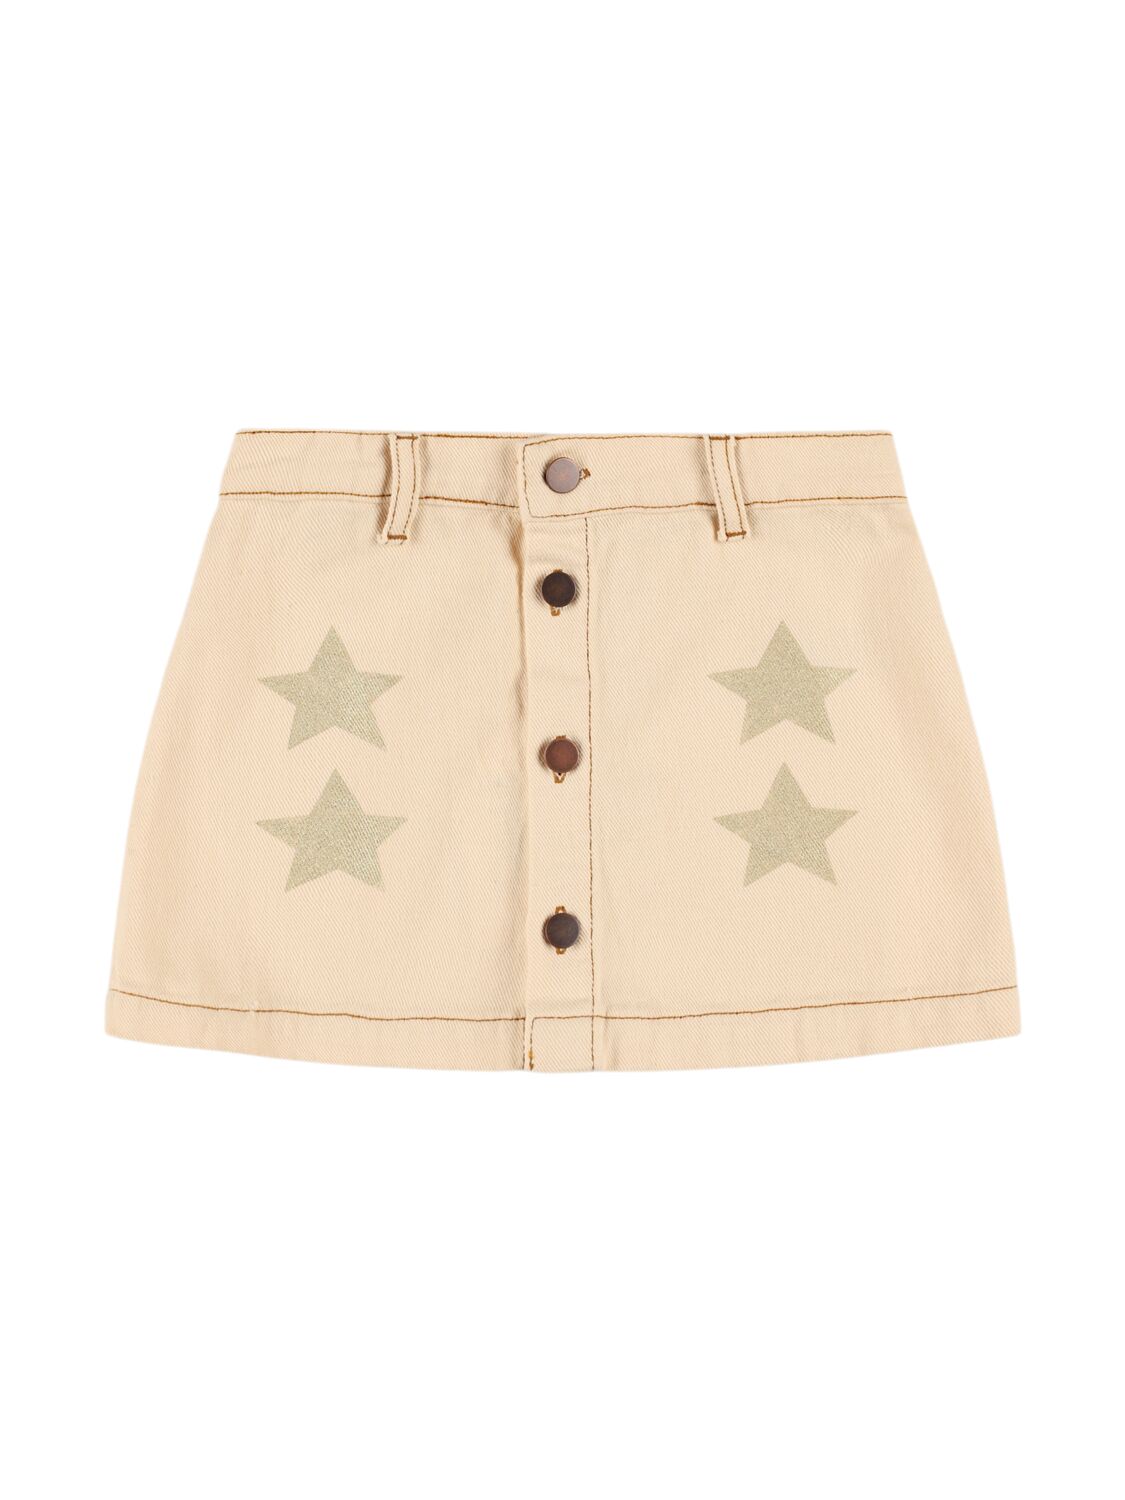 Image of Star Print Cotton Denim Skirt